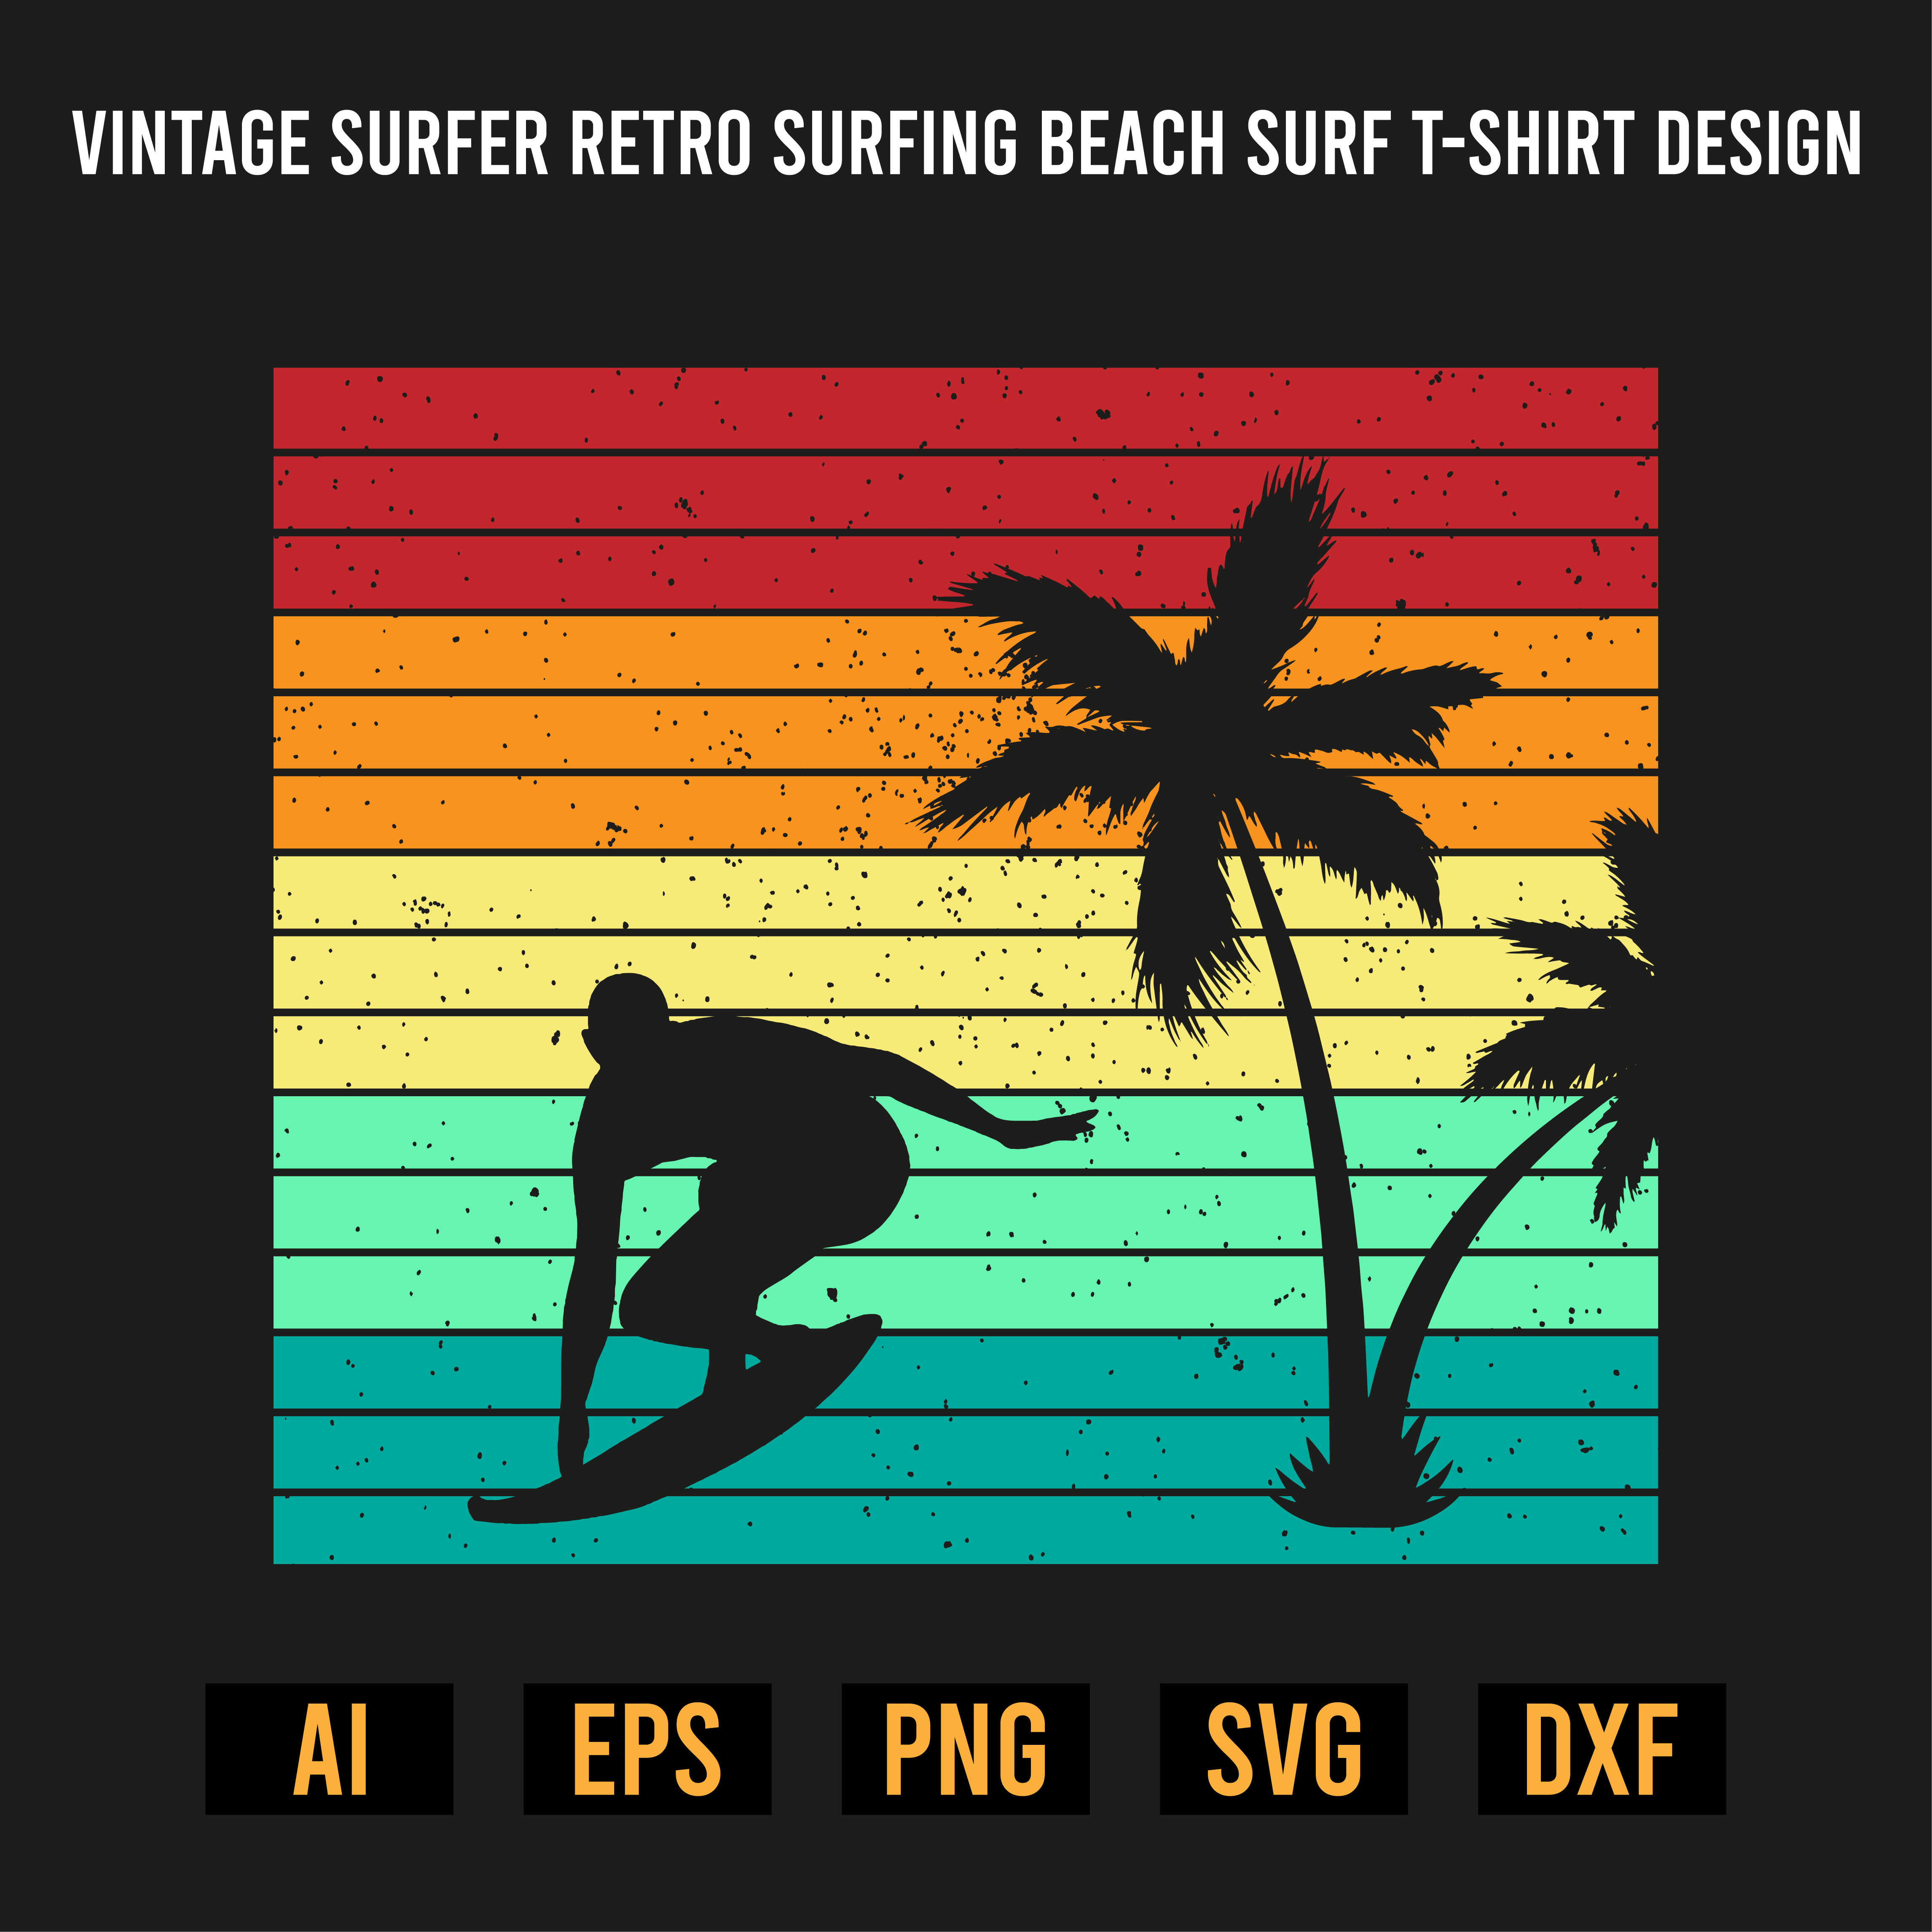 Vintage Surfer Retro Surfing Beach Surf T-Shirt Design preview image.